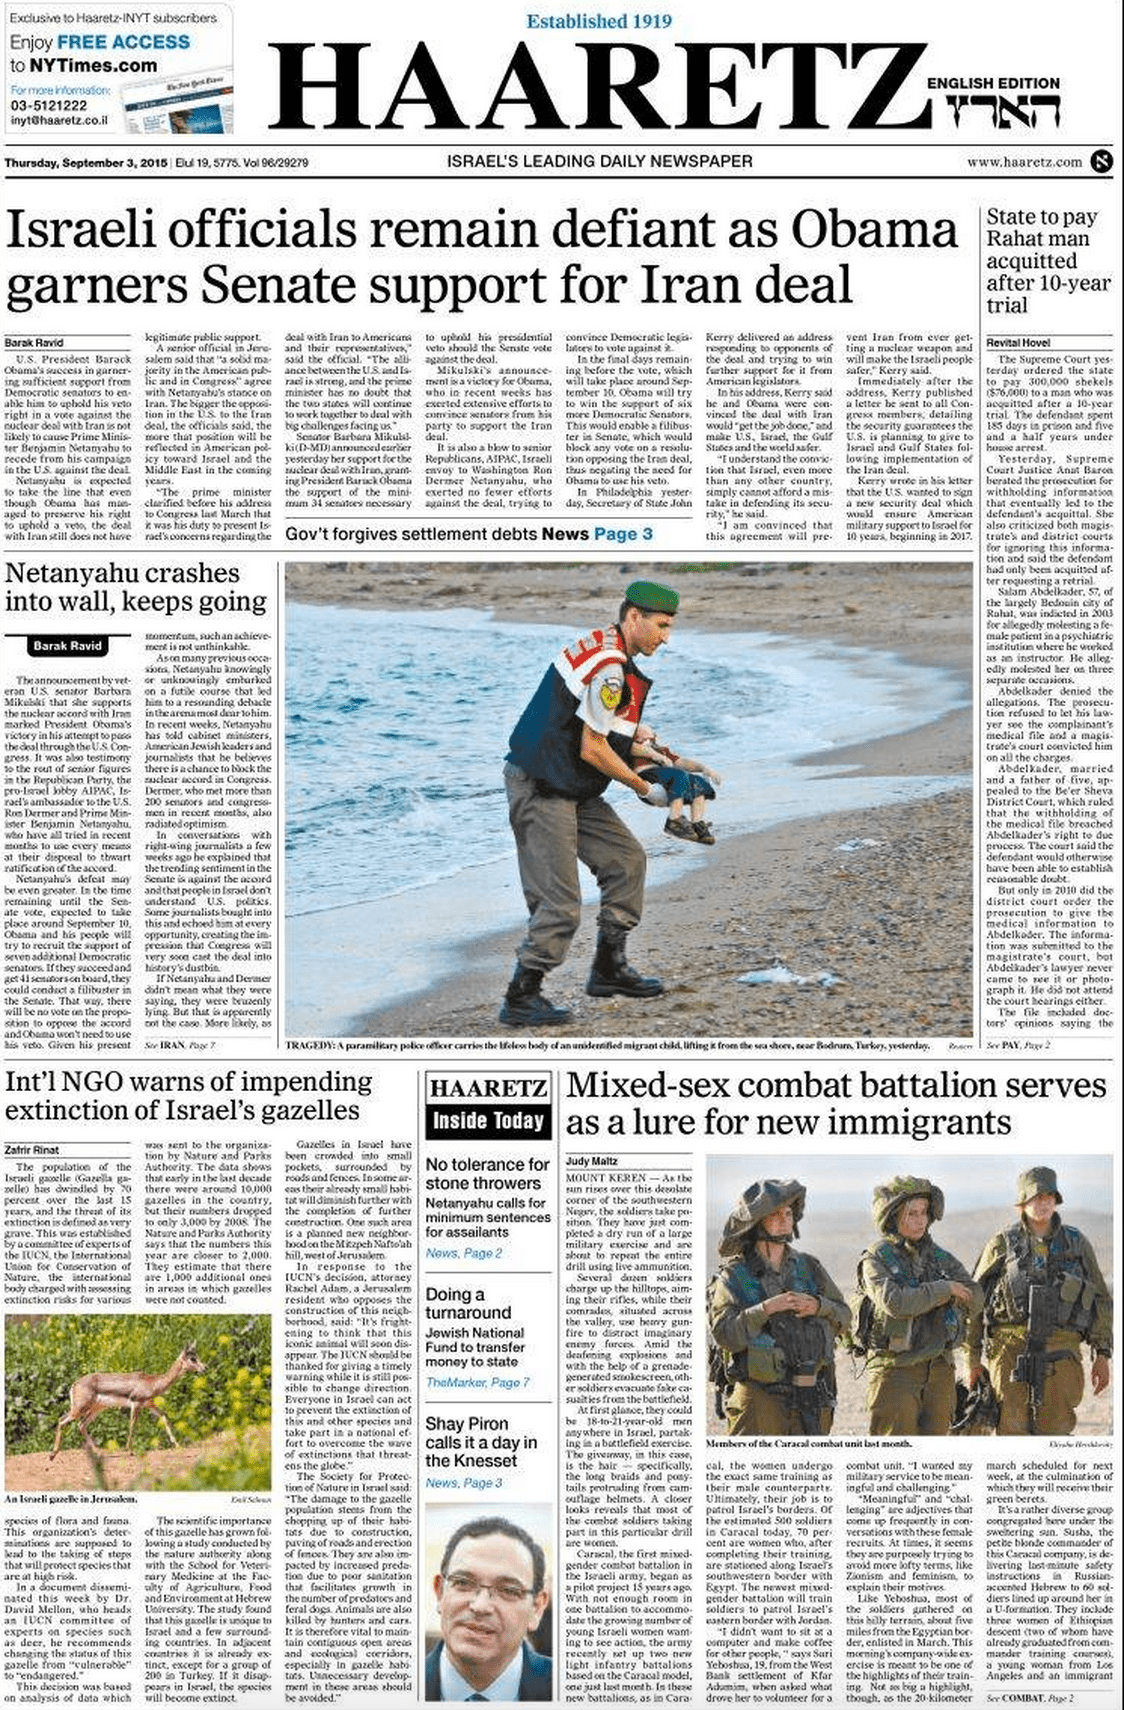 Drowned Migrant Boy Haaretz Front Page